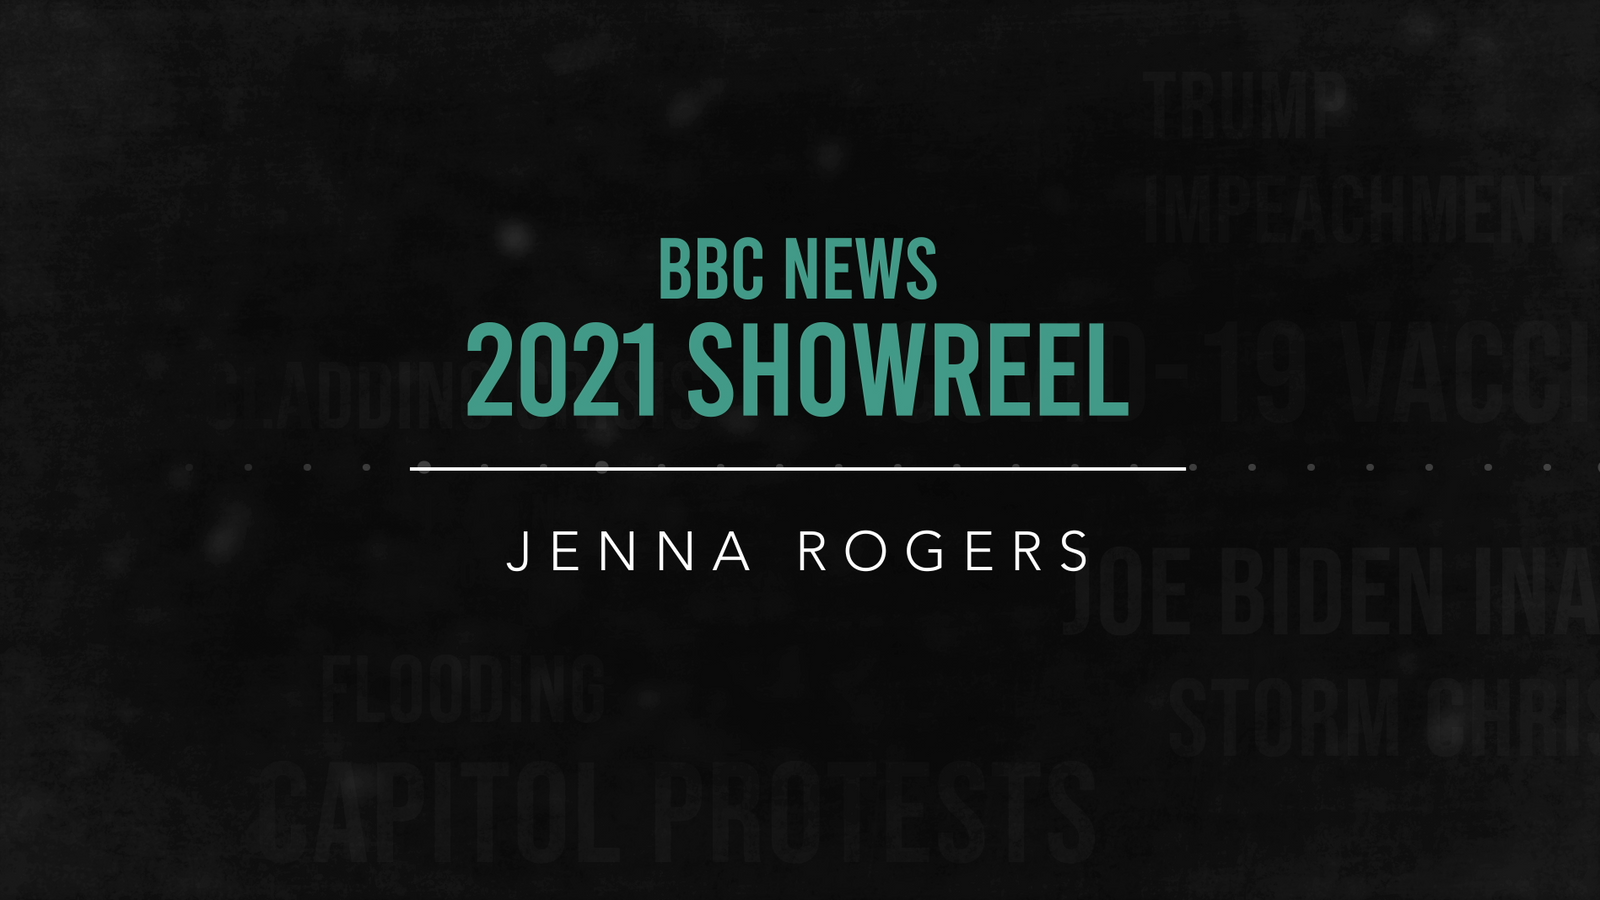 BBC News Showreel 2021